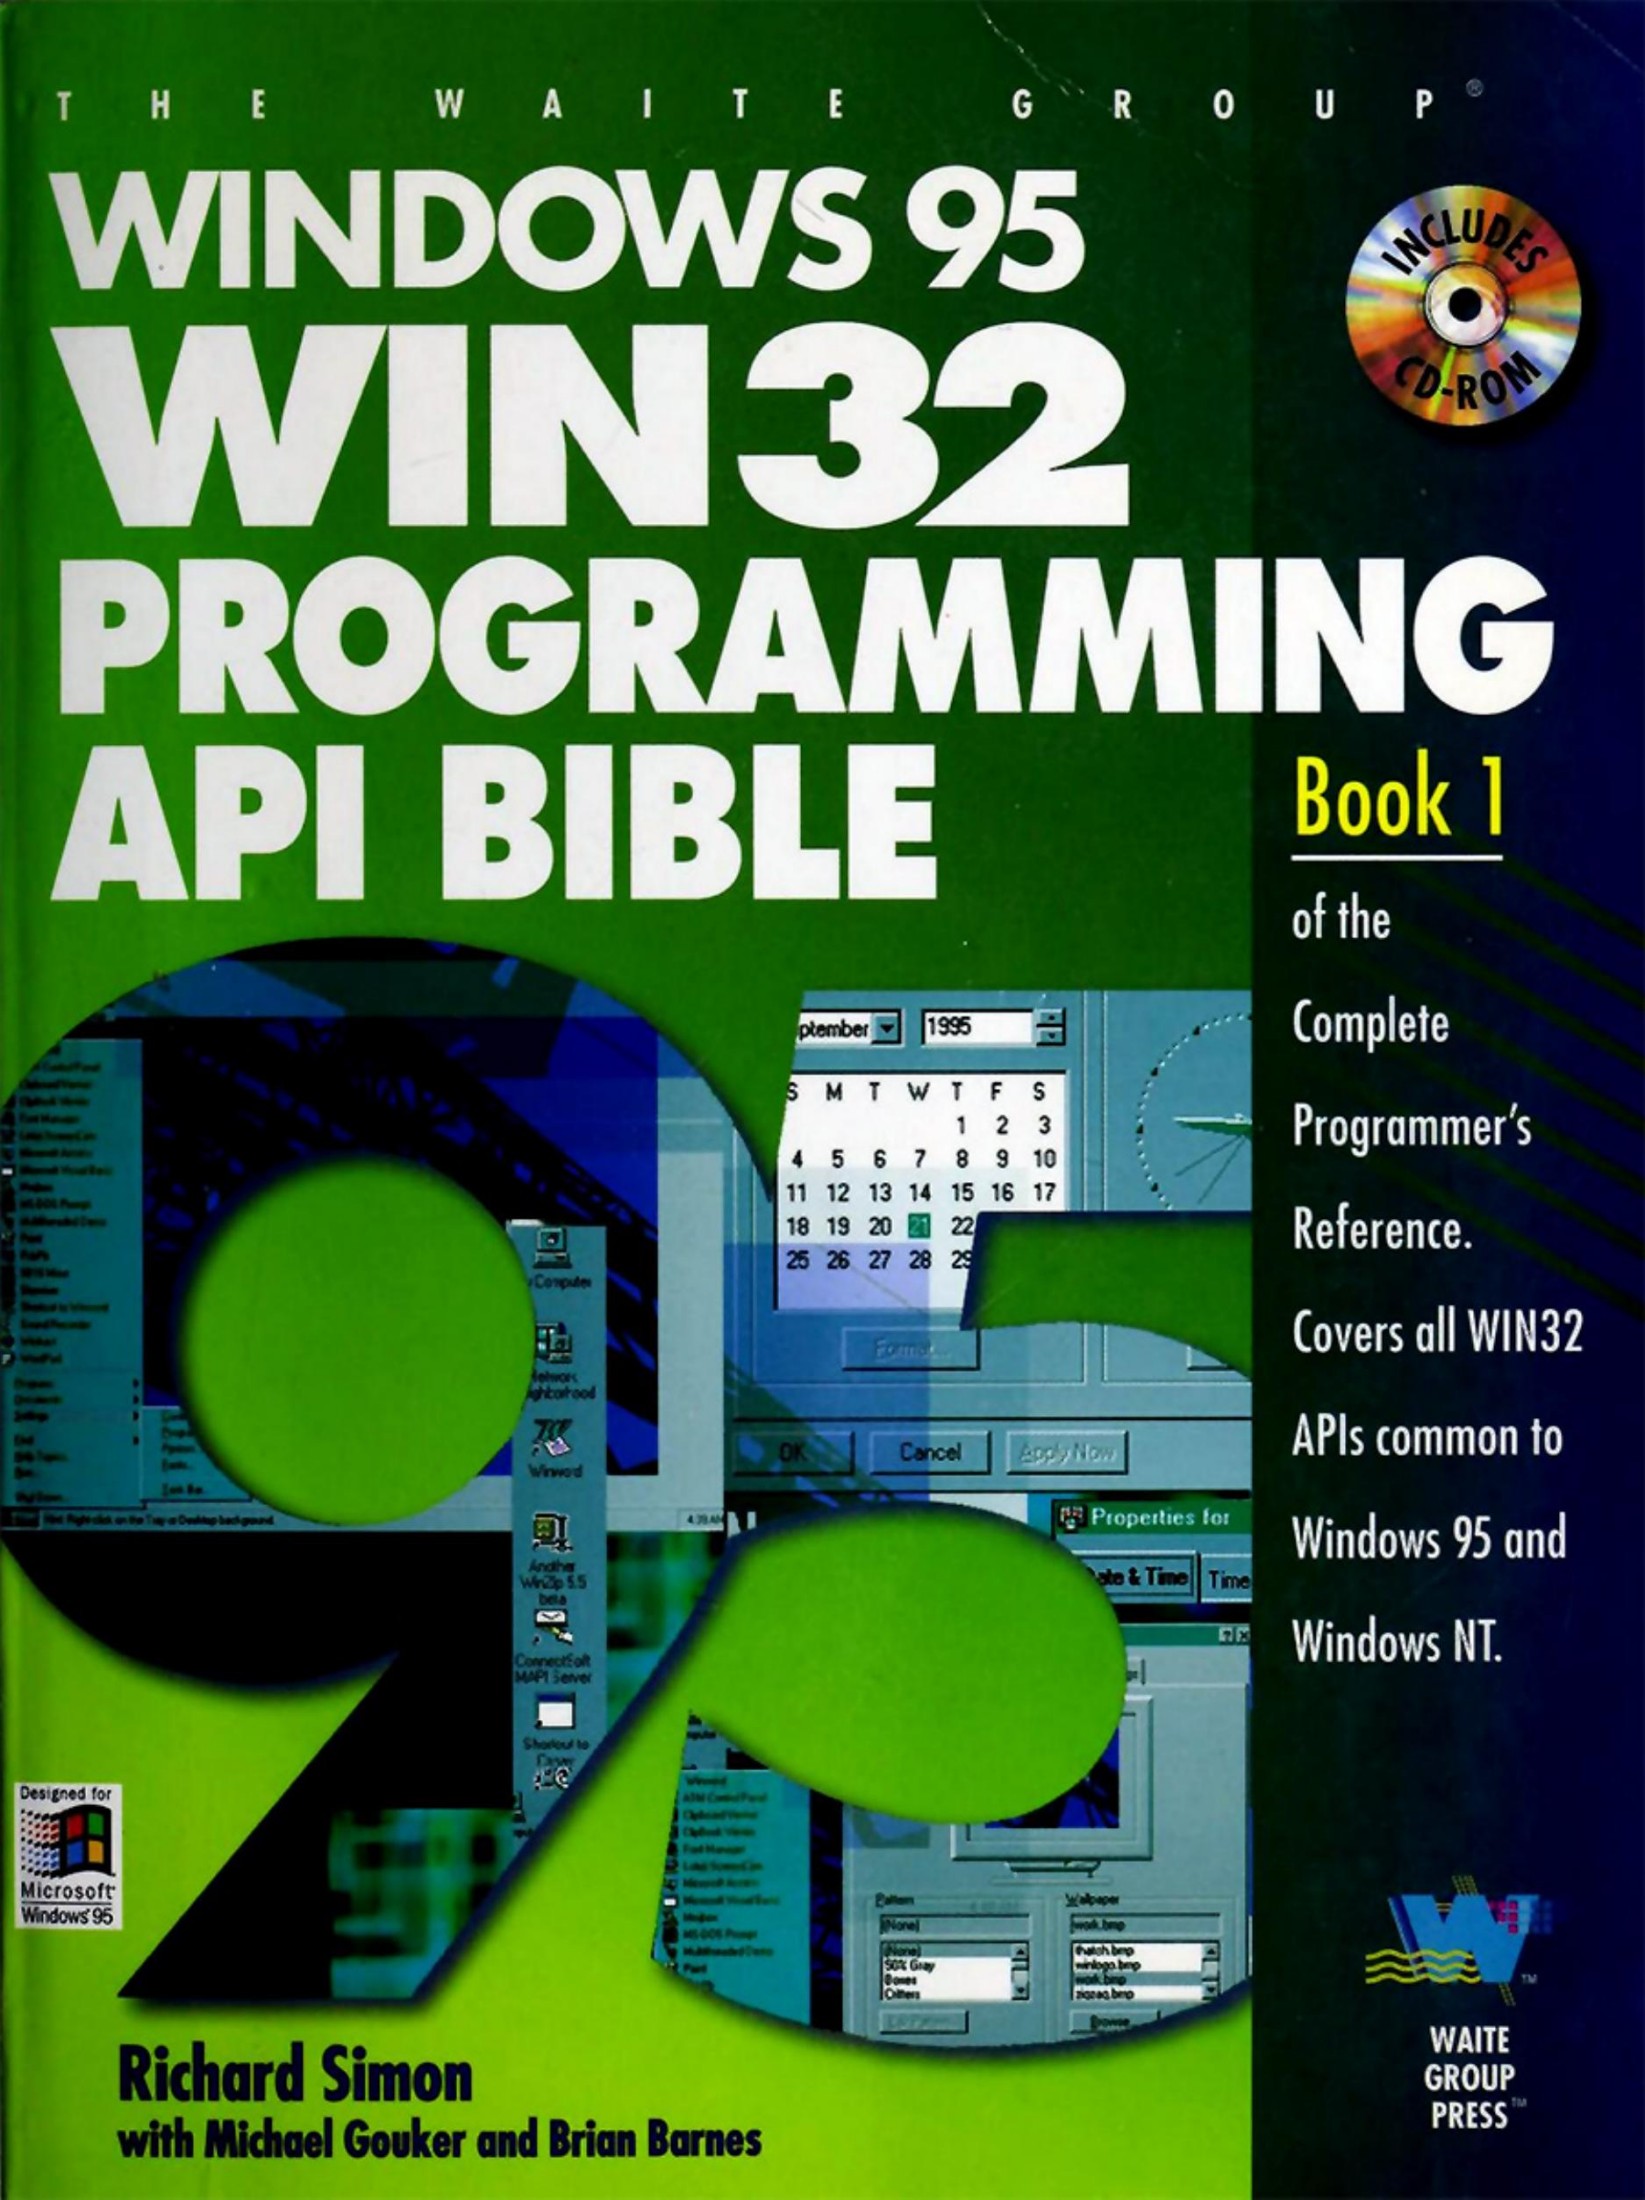 Windows 95 WIN 32 Programming API Bible